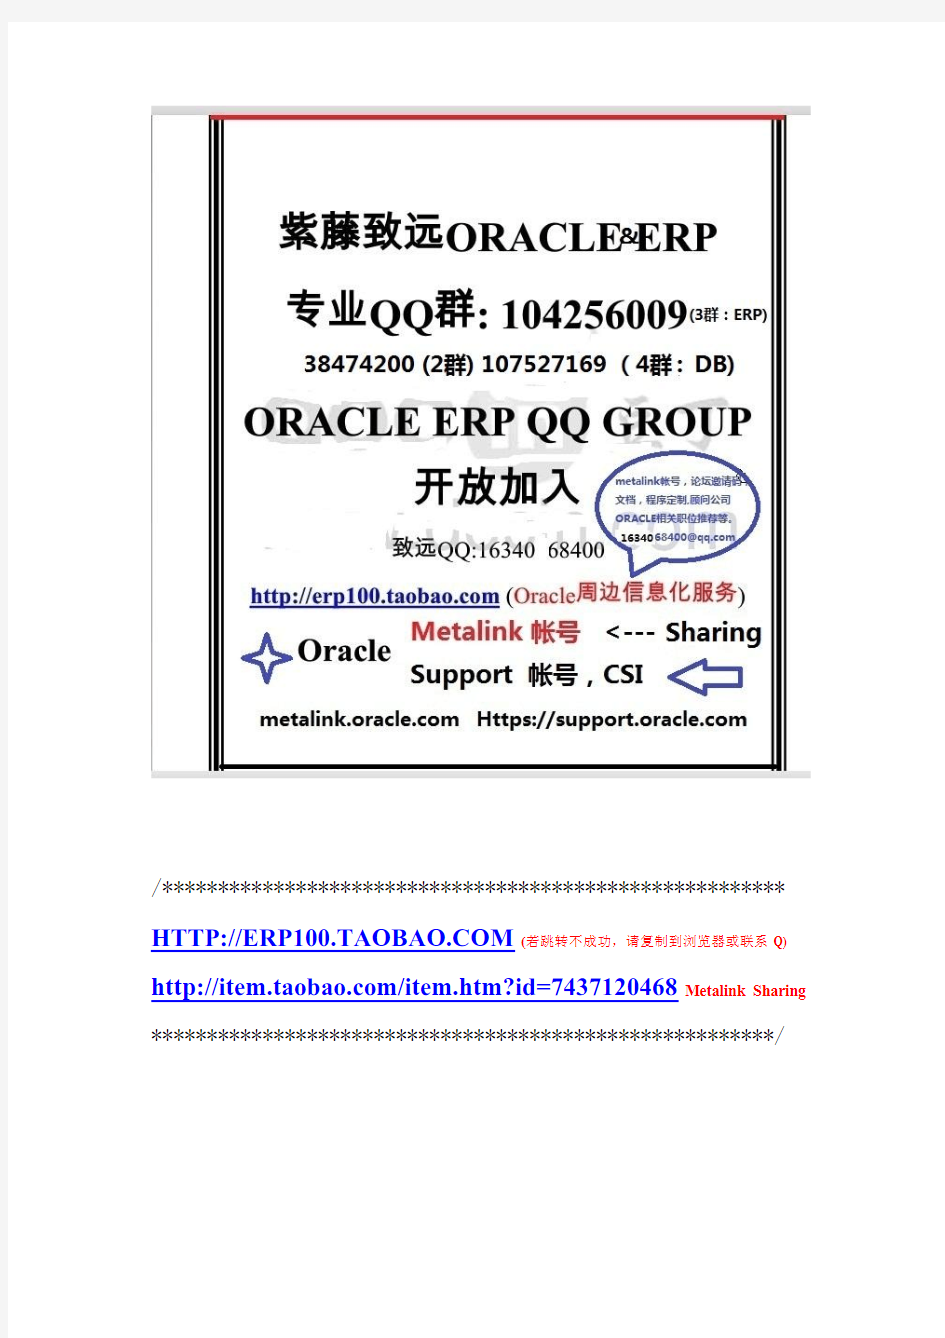 Oracle DBA 数据库日常维护手册 常用SQL 脚本